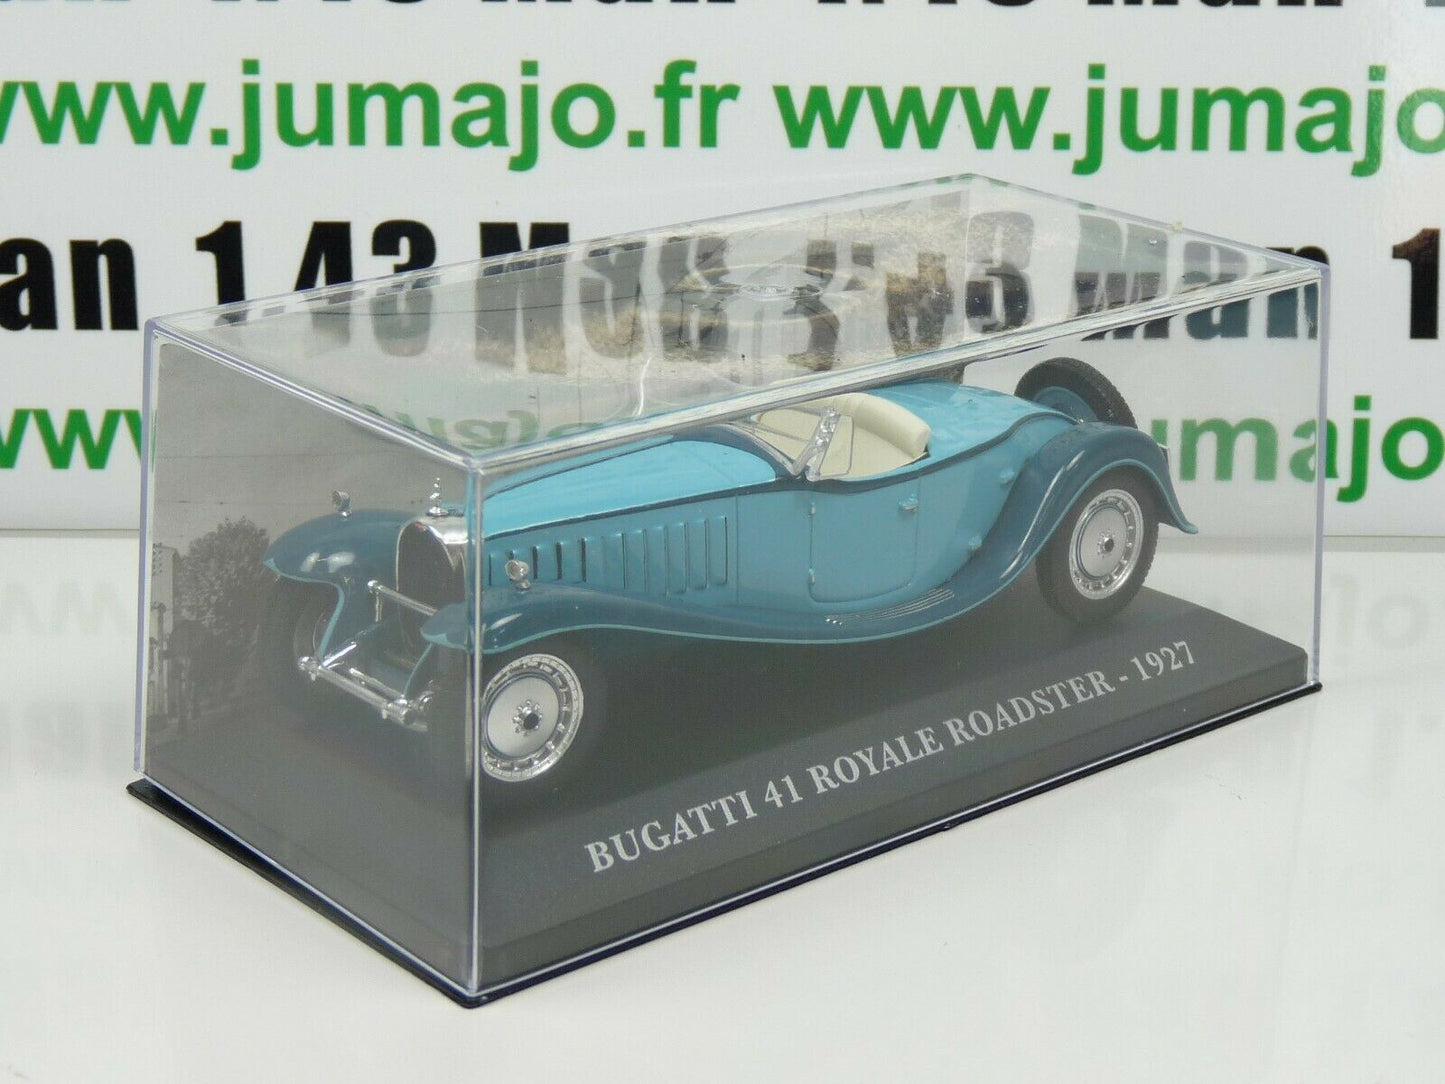 AUTZ Voiture 1/43 IXO altaya Voitures d'autrefois BUGATTI 41 Royale Roadster 1927